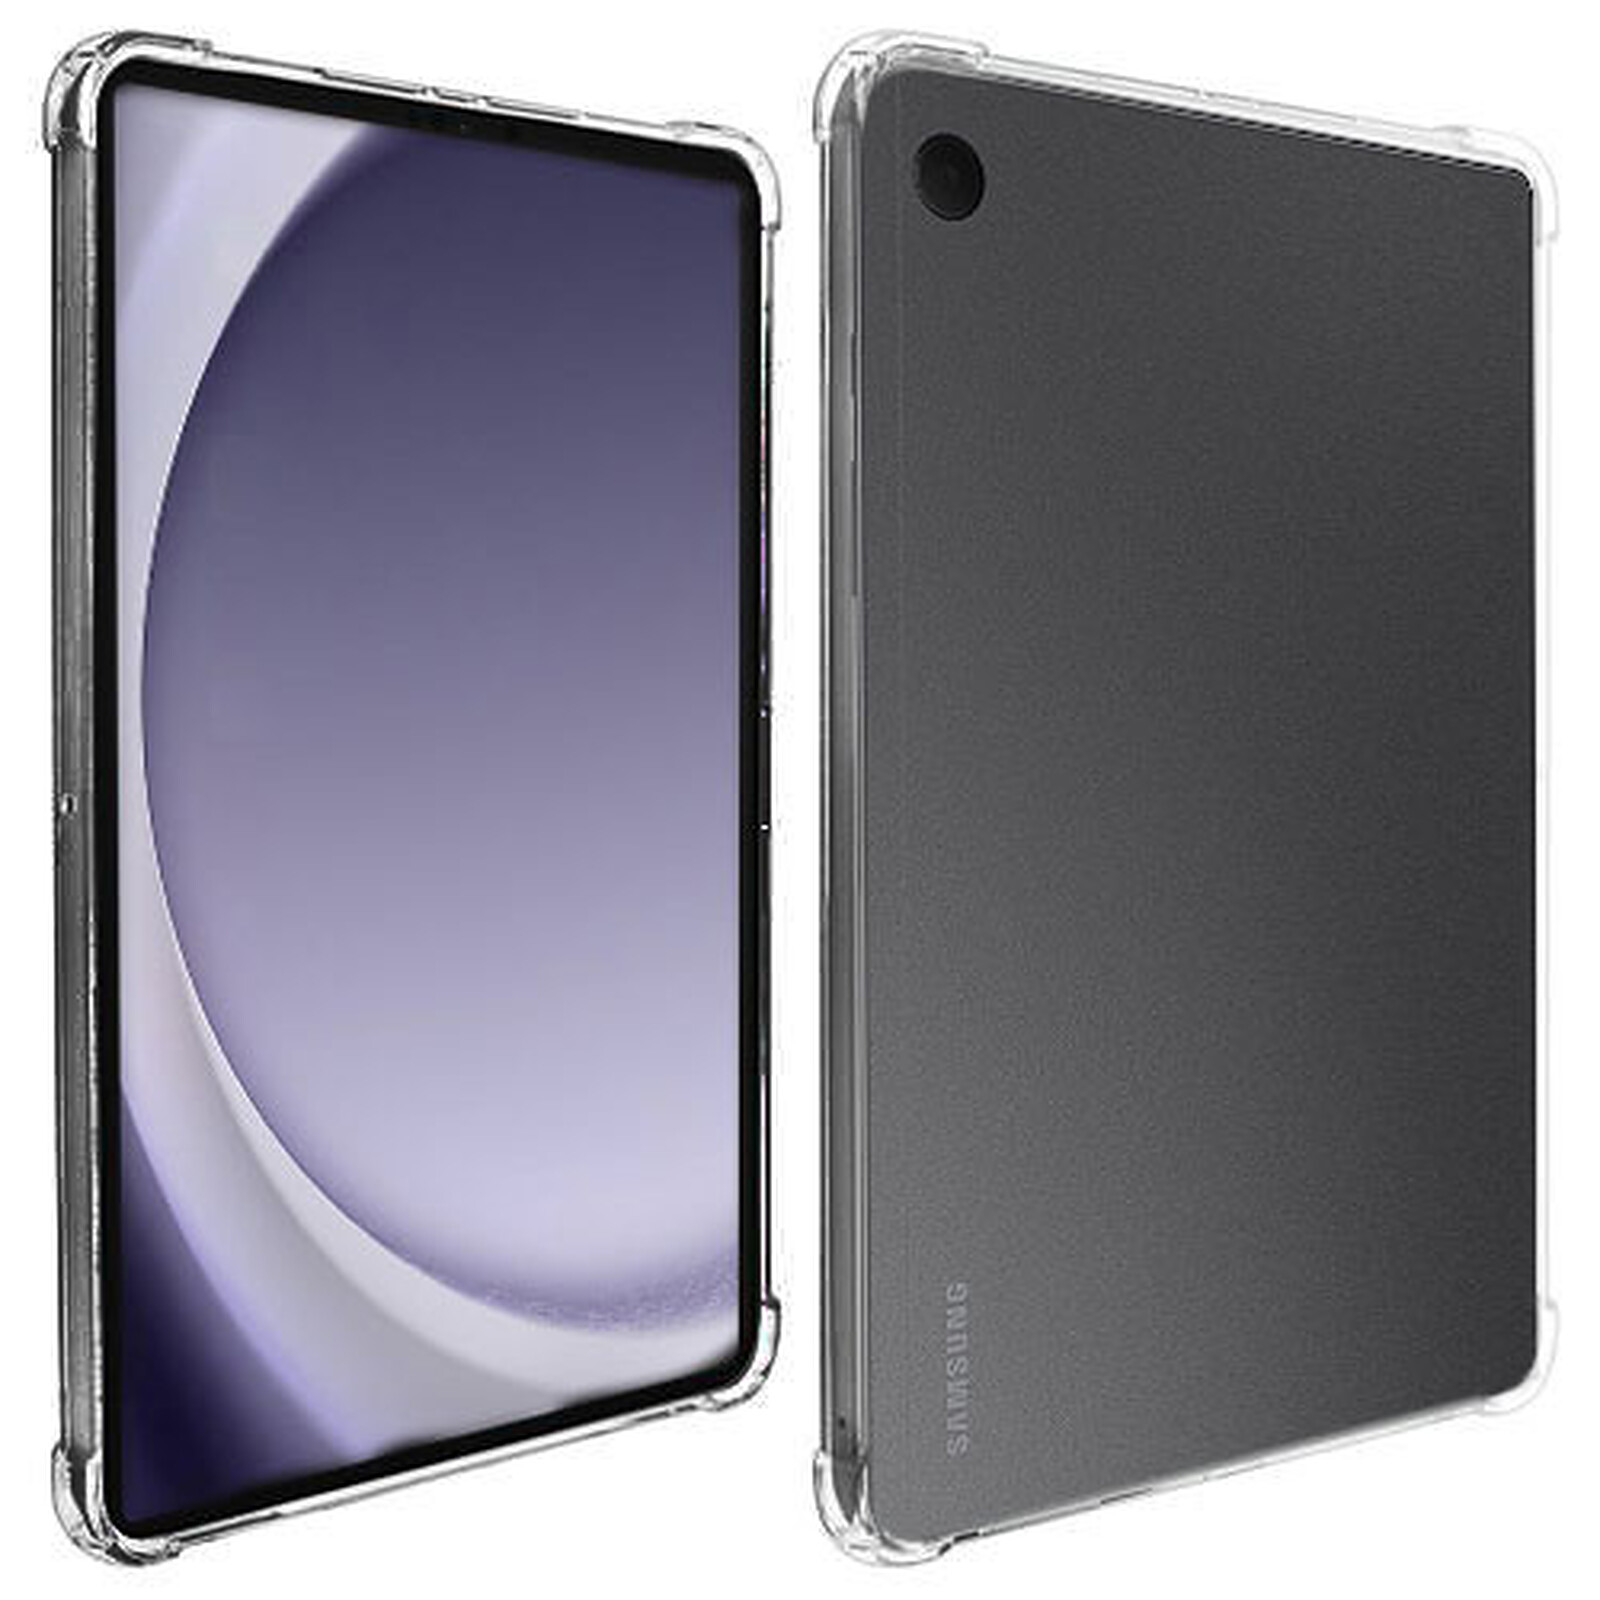 Coque Samsung Galaxy Tab A 10.1 (2019) Résistante Support Pliable